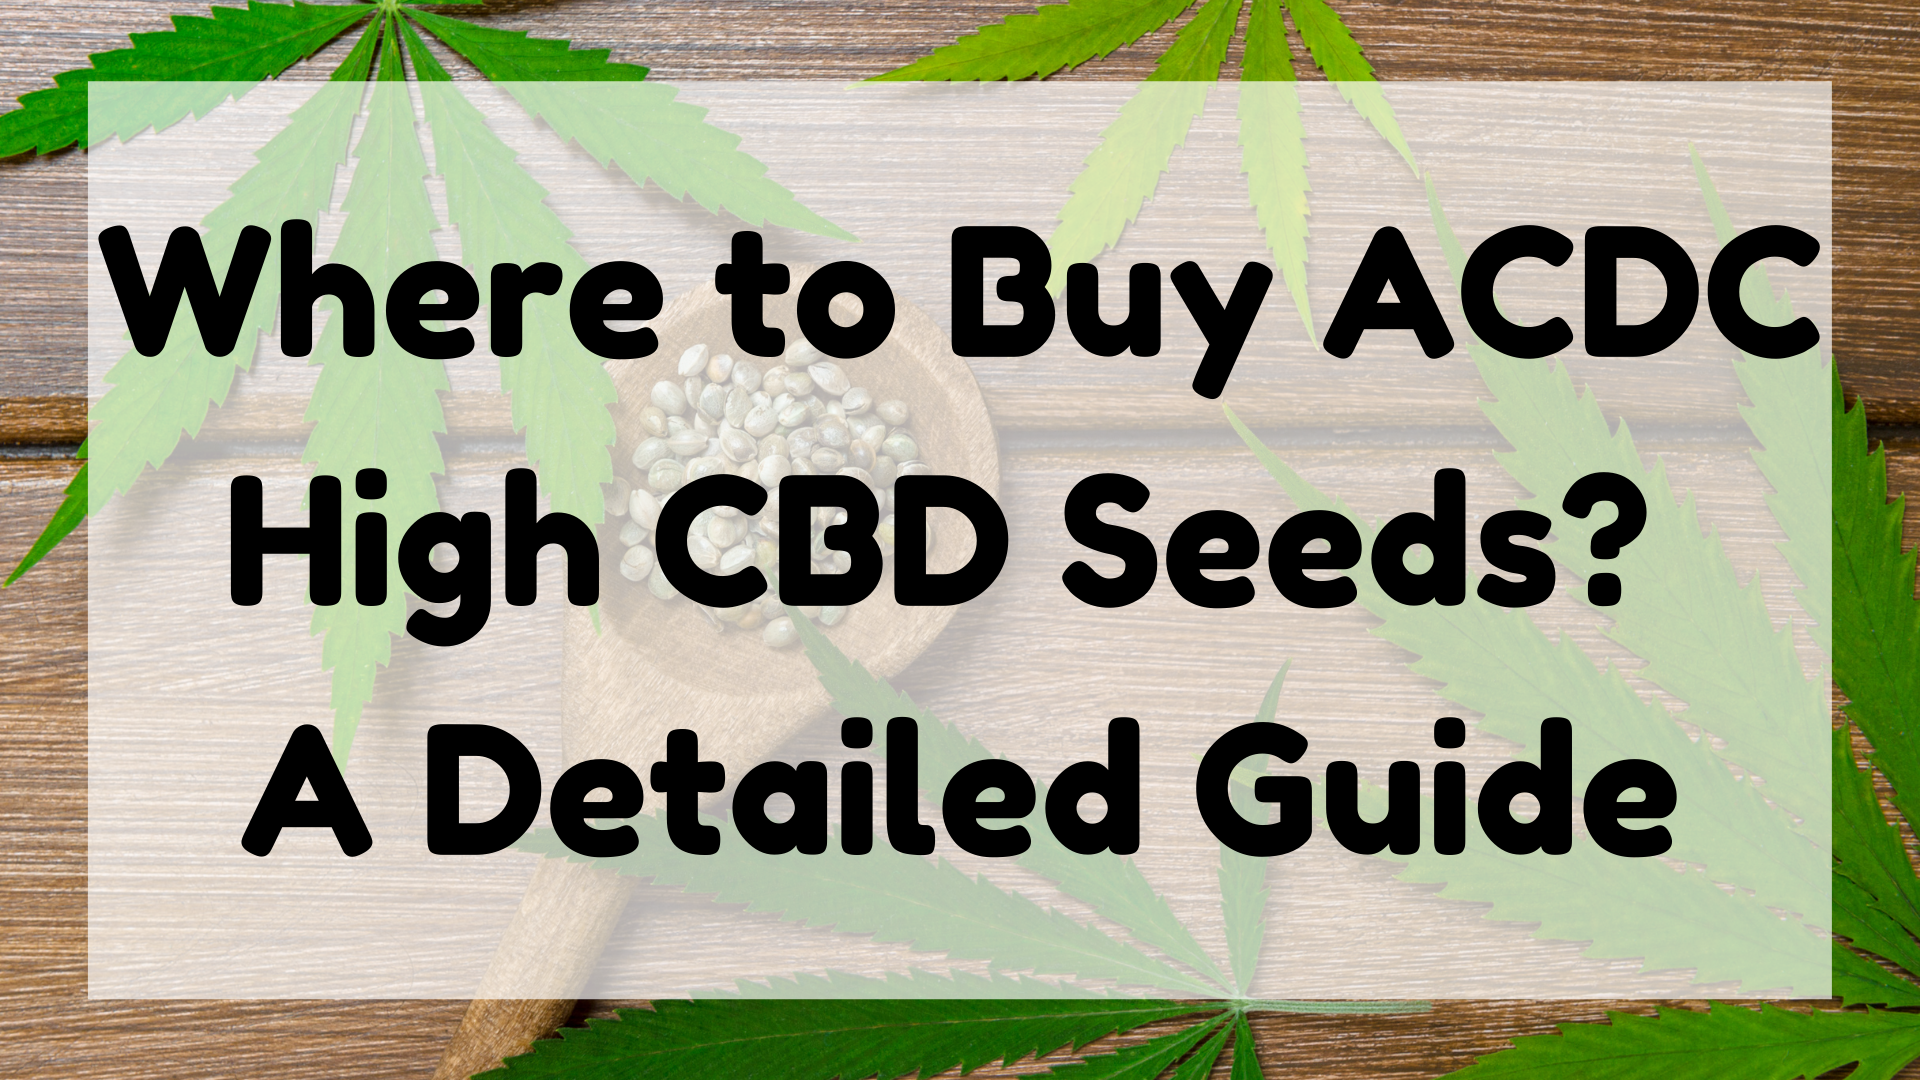 ACDC High CBD Seeds